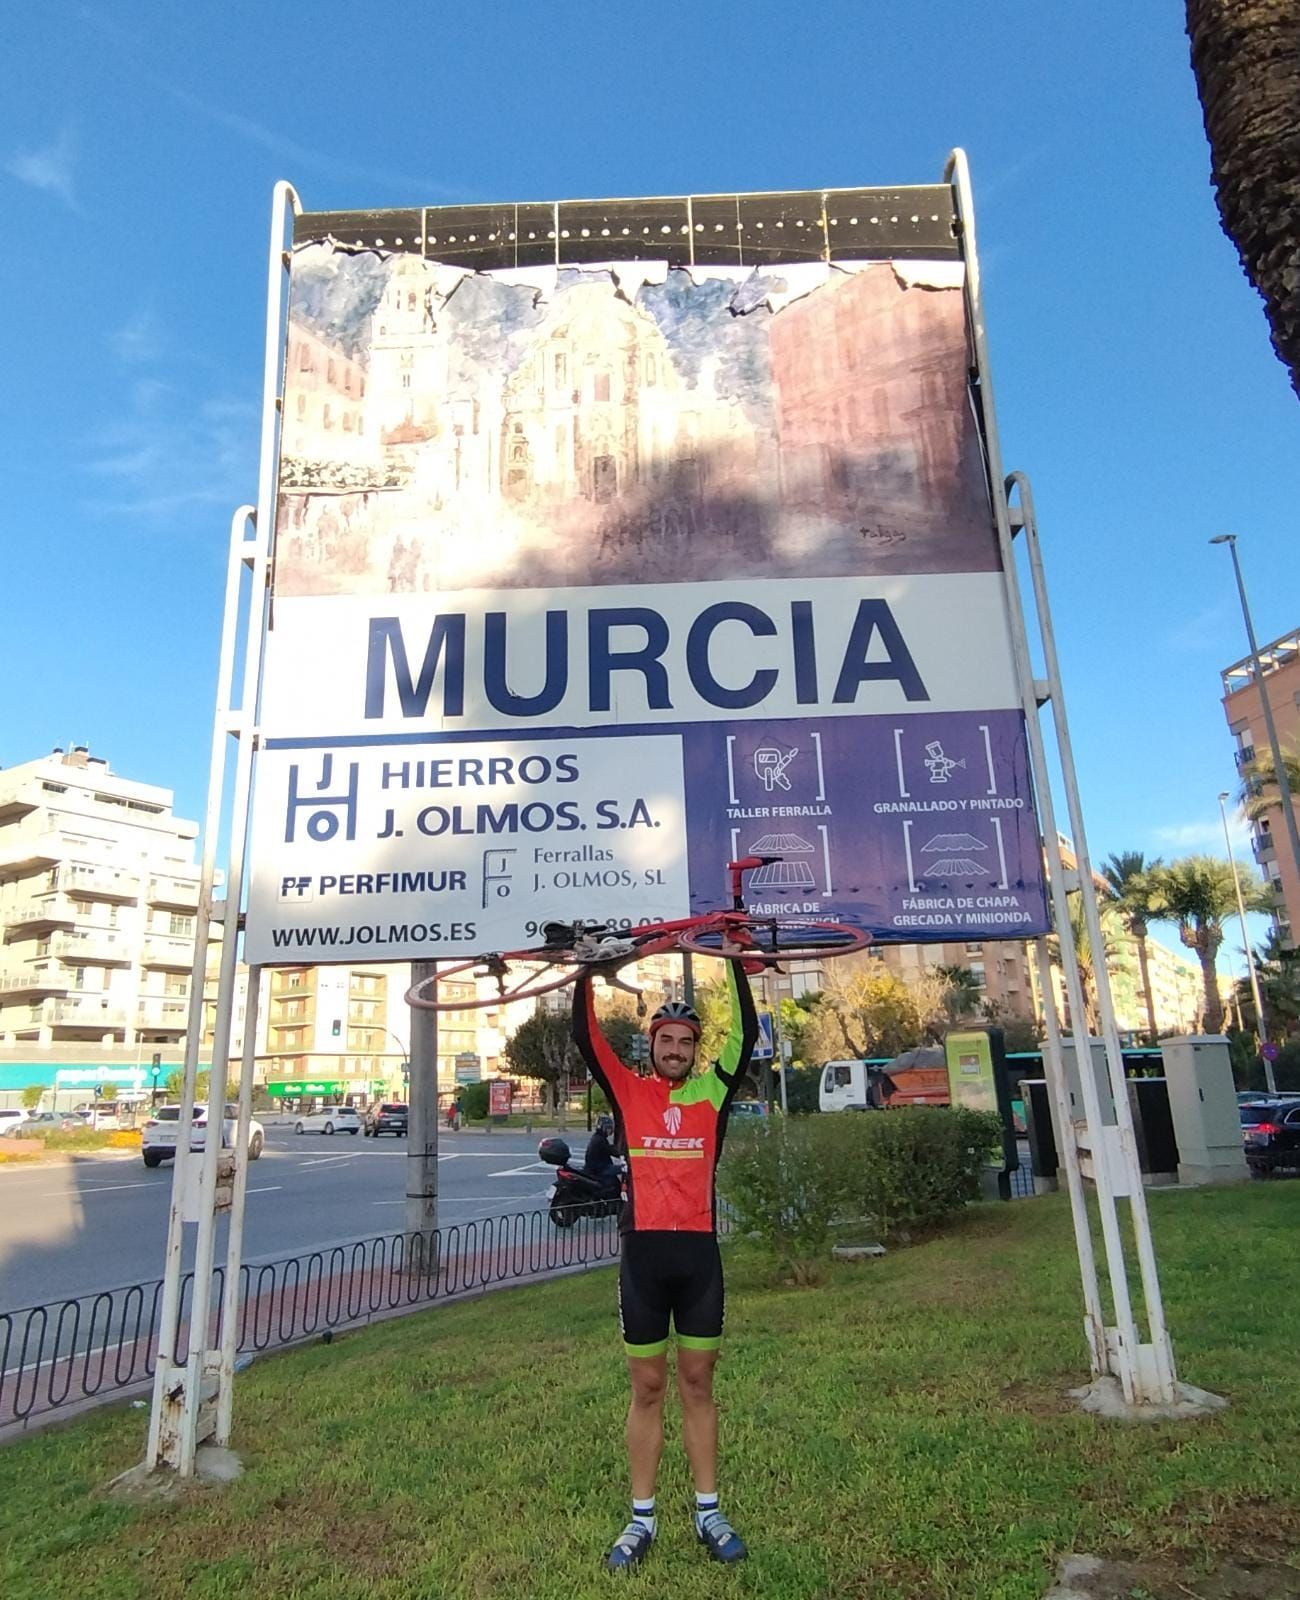 El reto acabó a su llegada a Murcia capital.